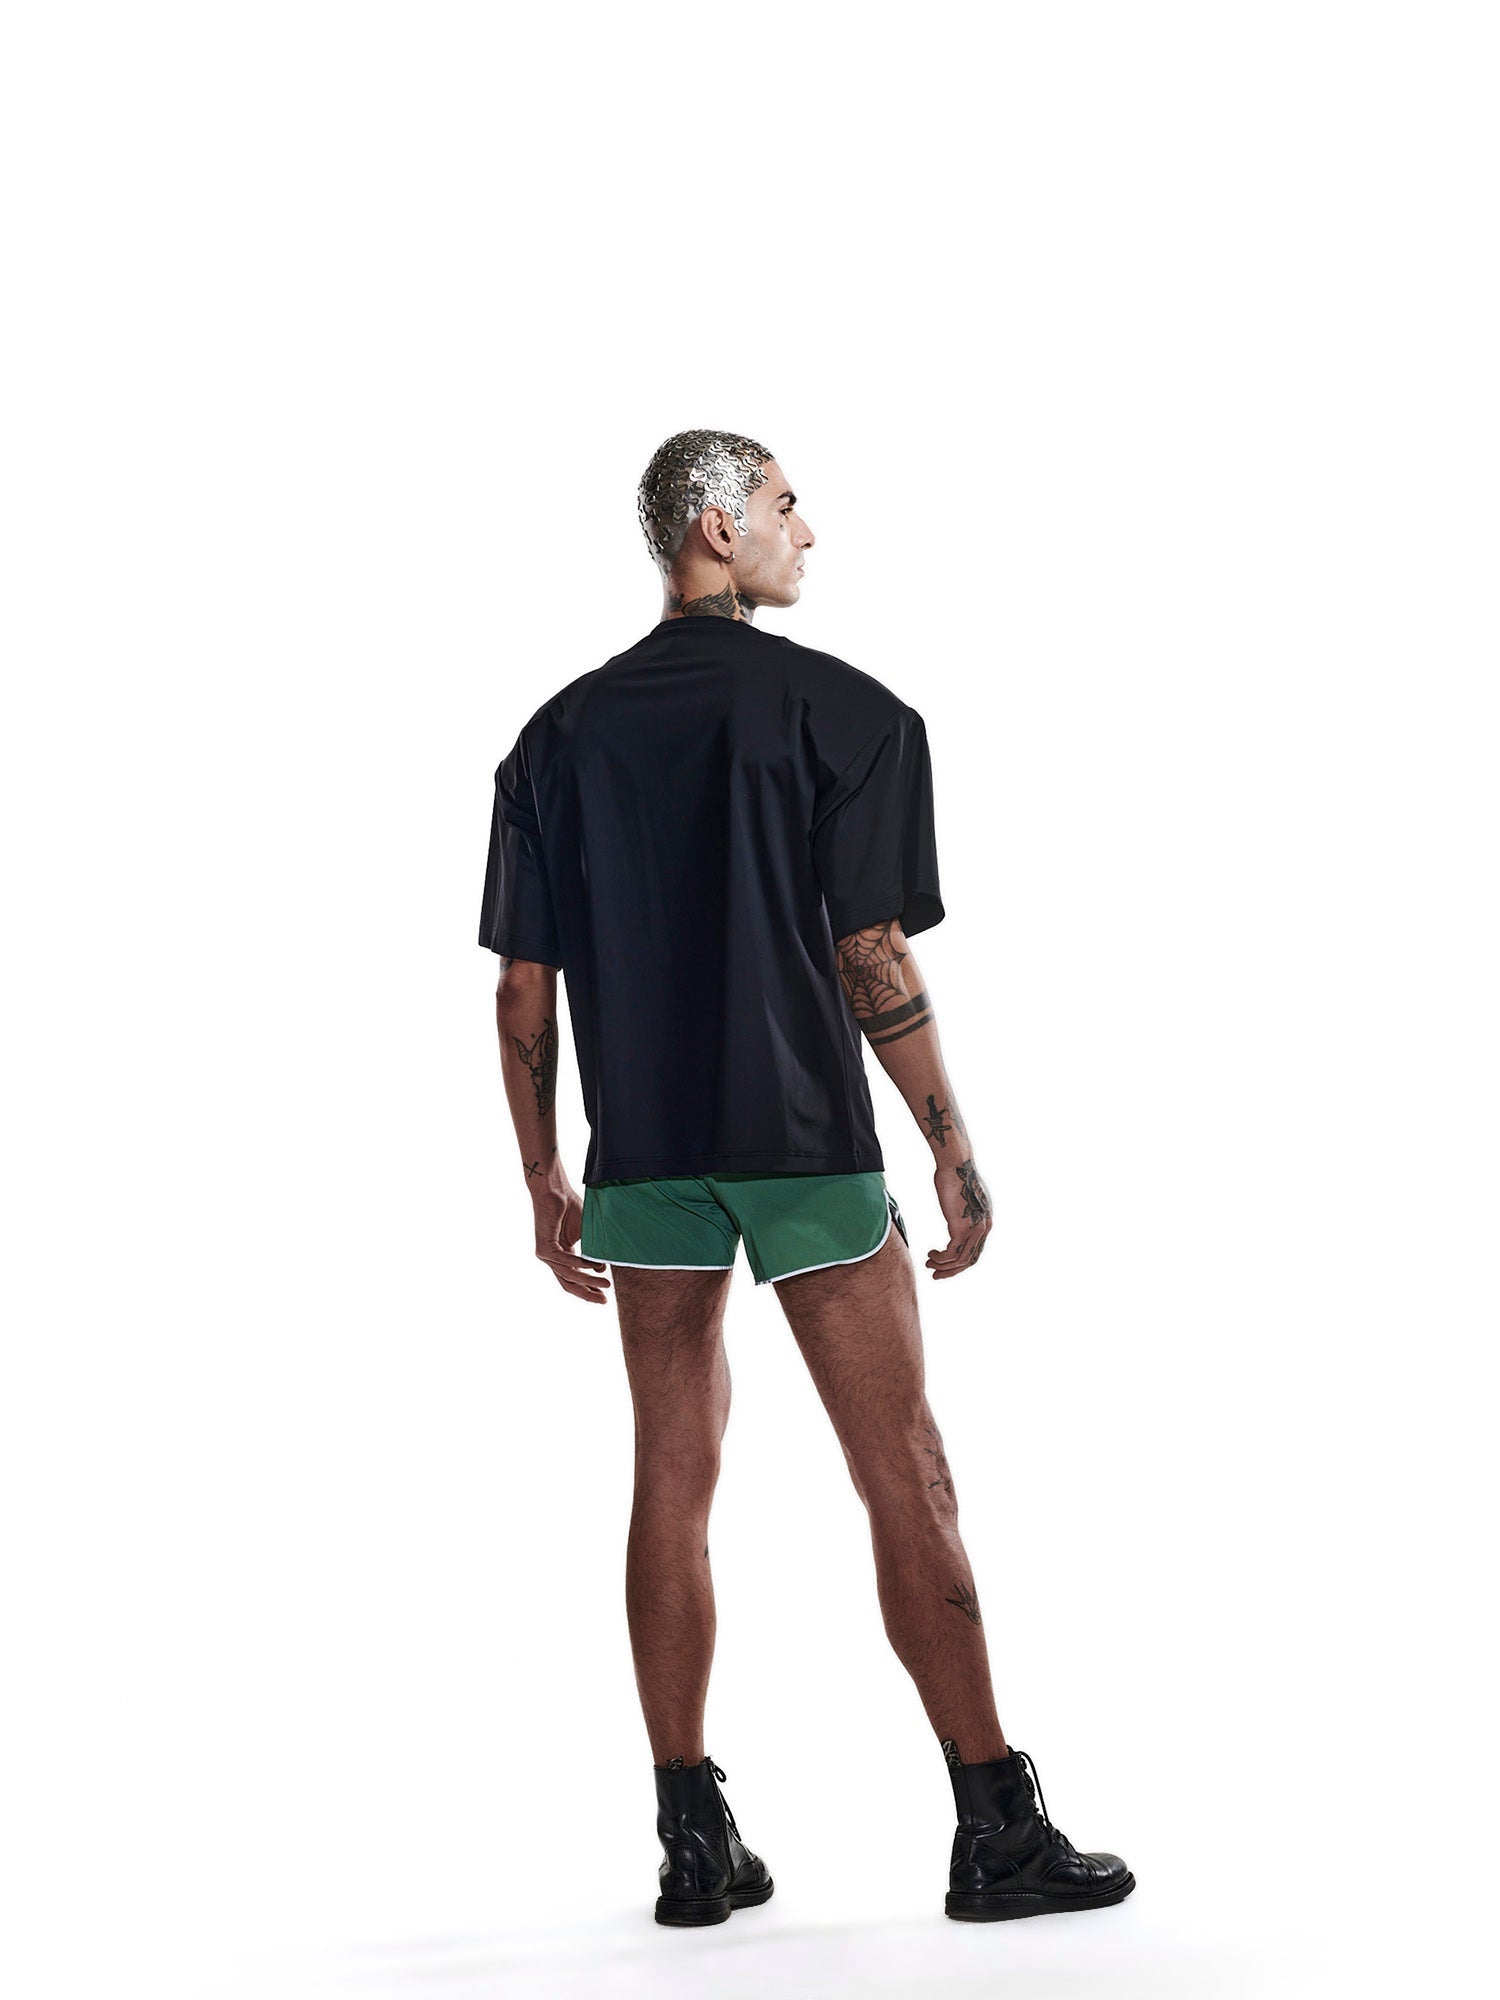 Green reflective shorts